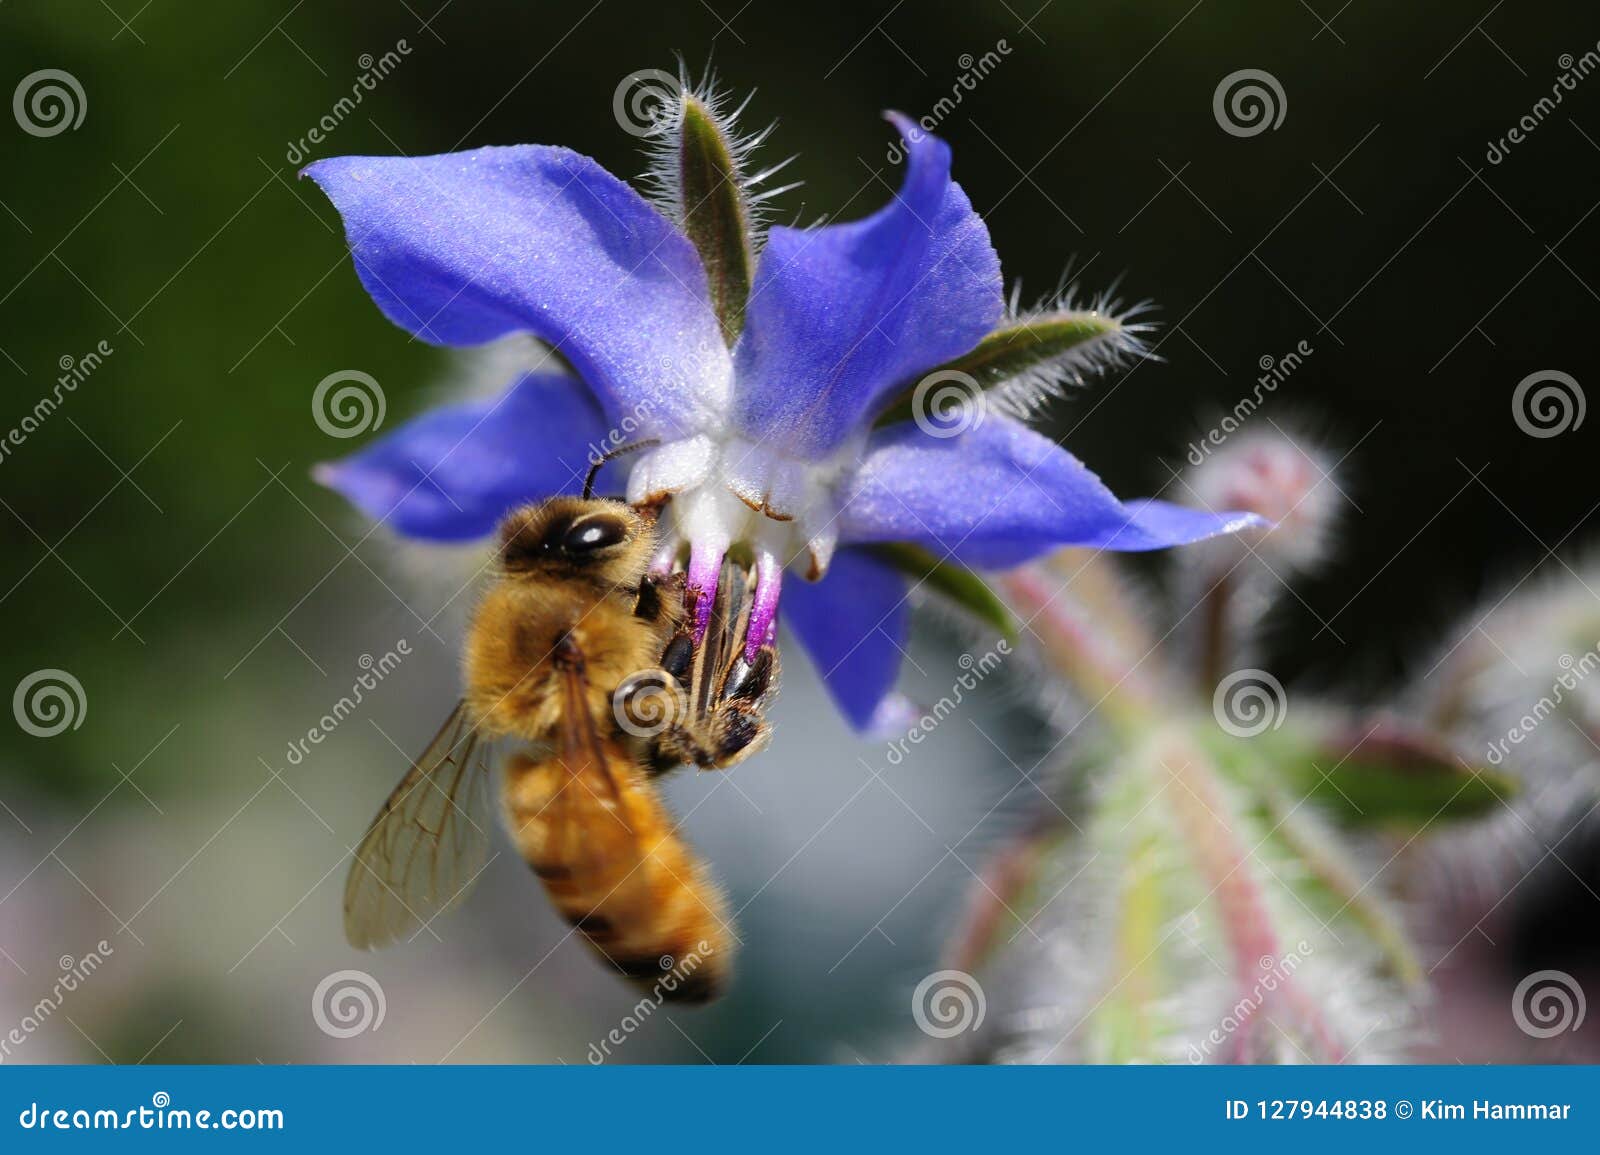 a bee lands on a borago officinalis, or borageflower.